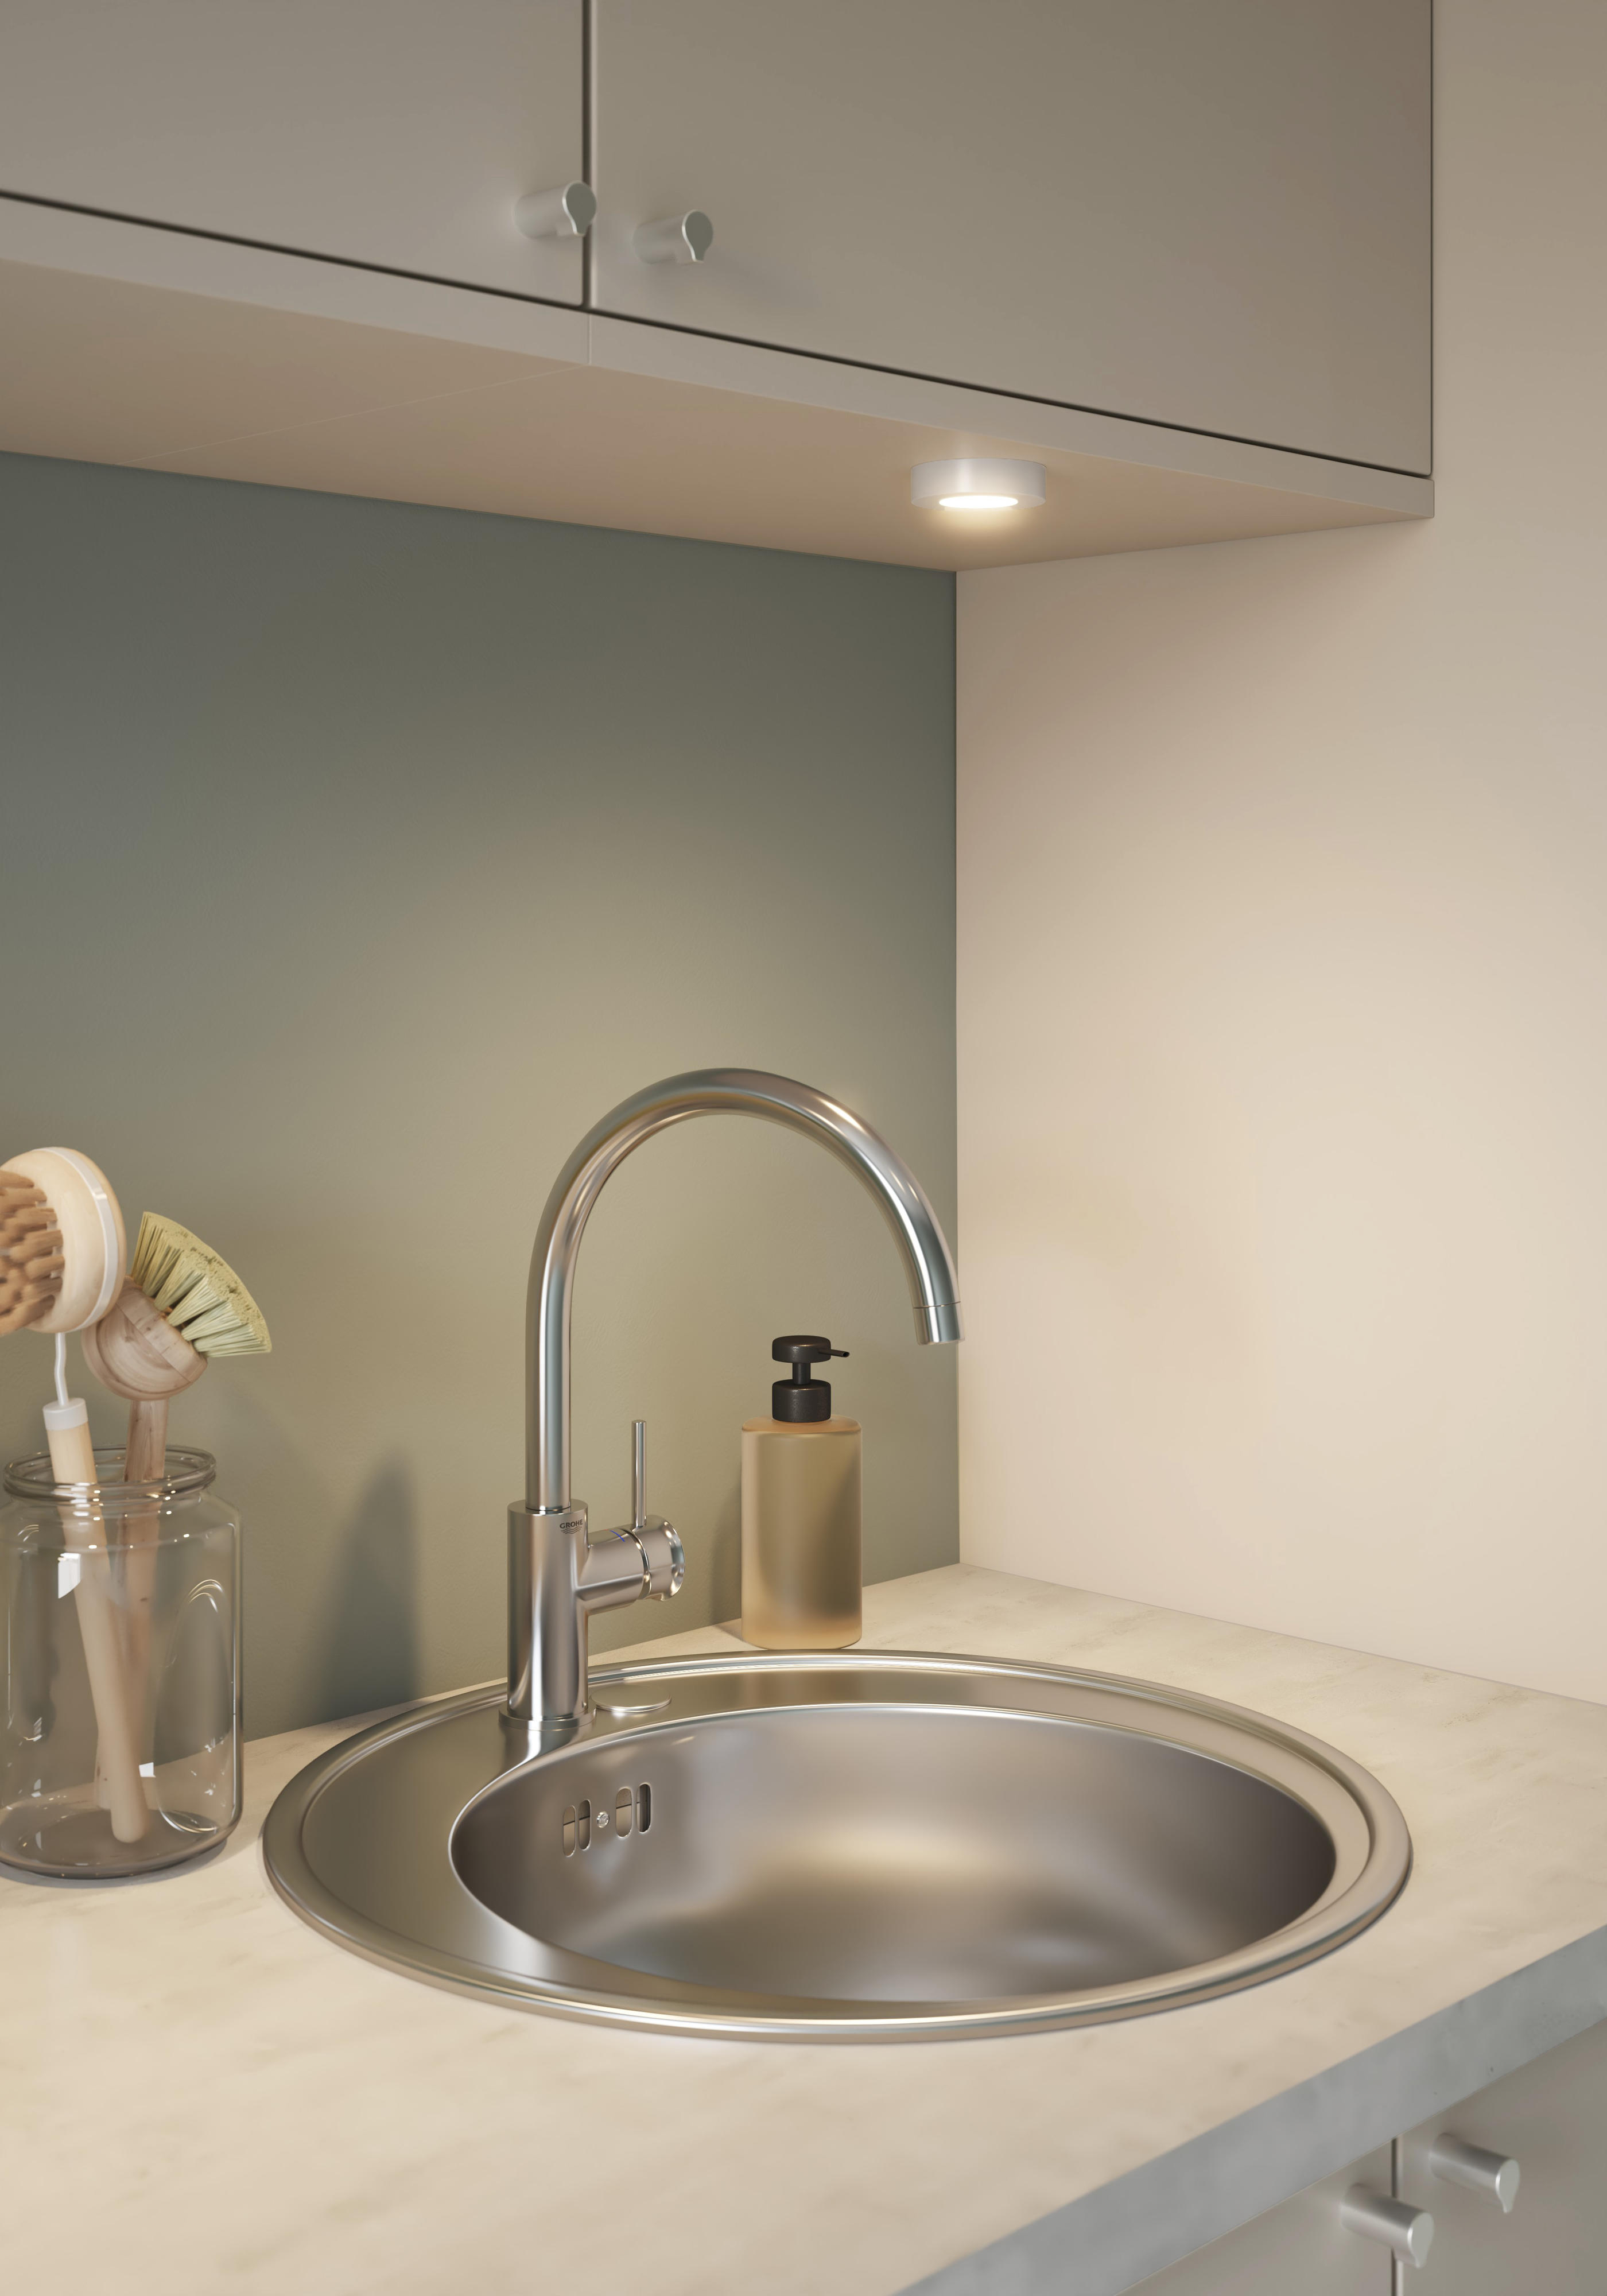 EPOQ - Laundry Room - L4 - Core Grey Mist - Beige - White Laminate Worktop - topmounted sink - chrome tap_edited